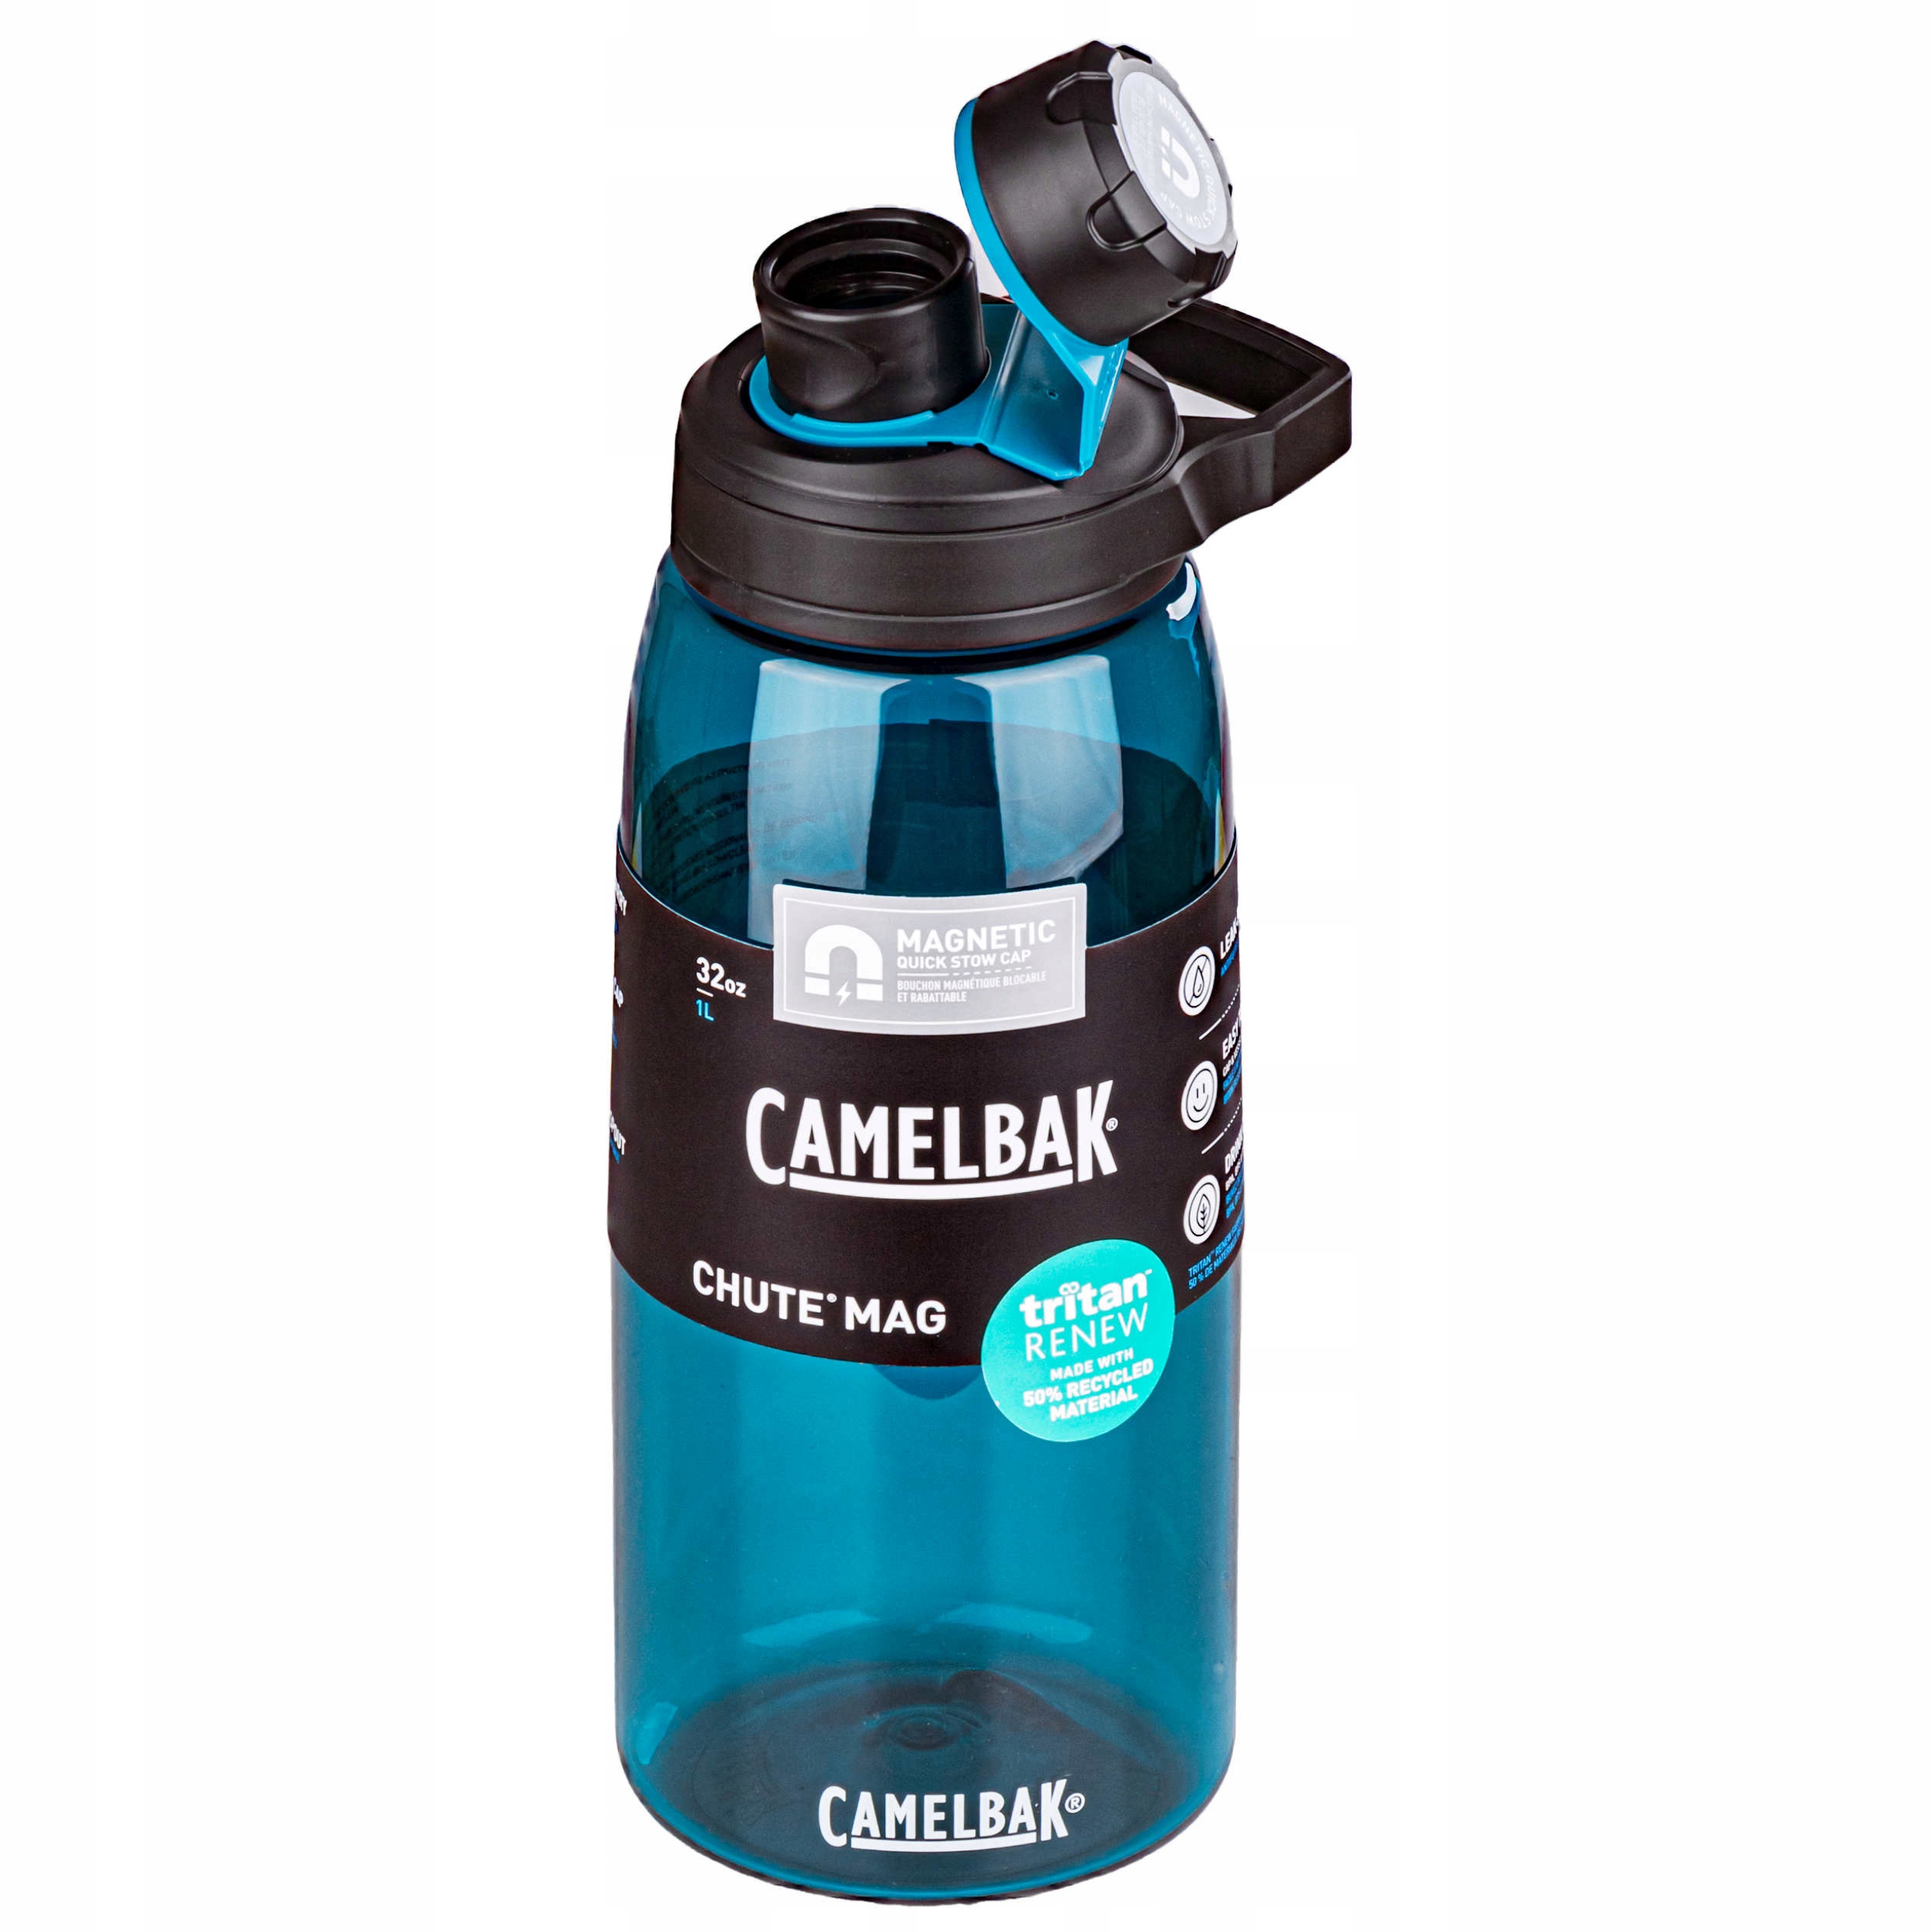 CamelBak Tritan Interlochen Water Bottle